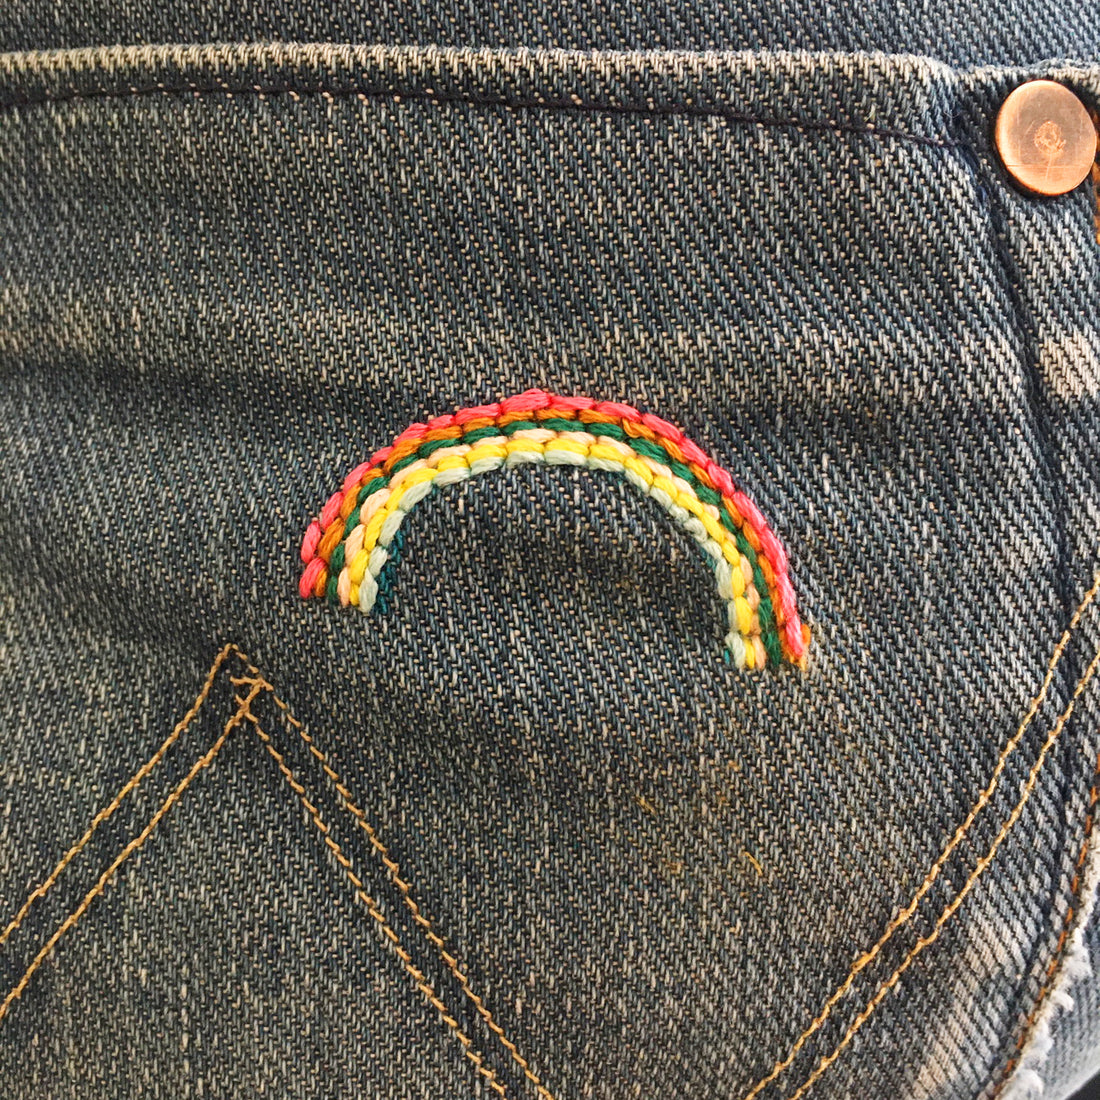 "Stitch a Rainbow" Tutorial